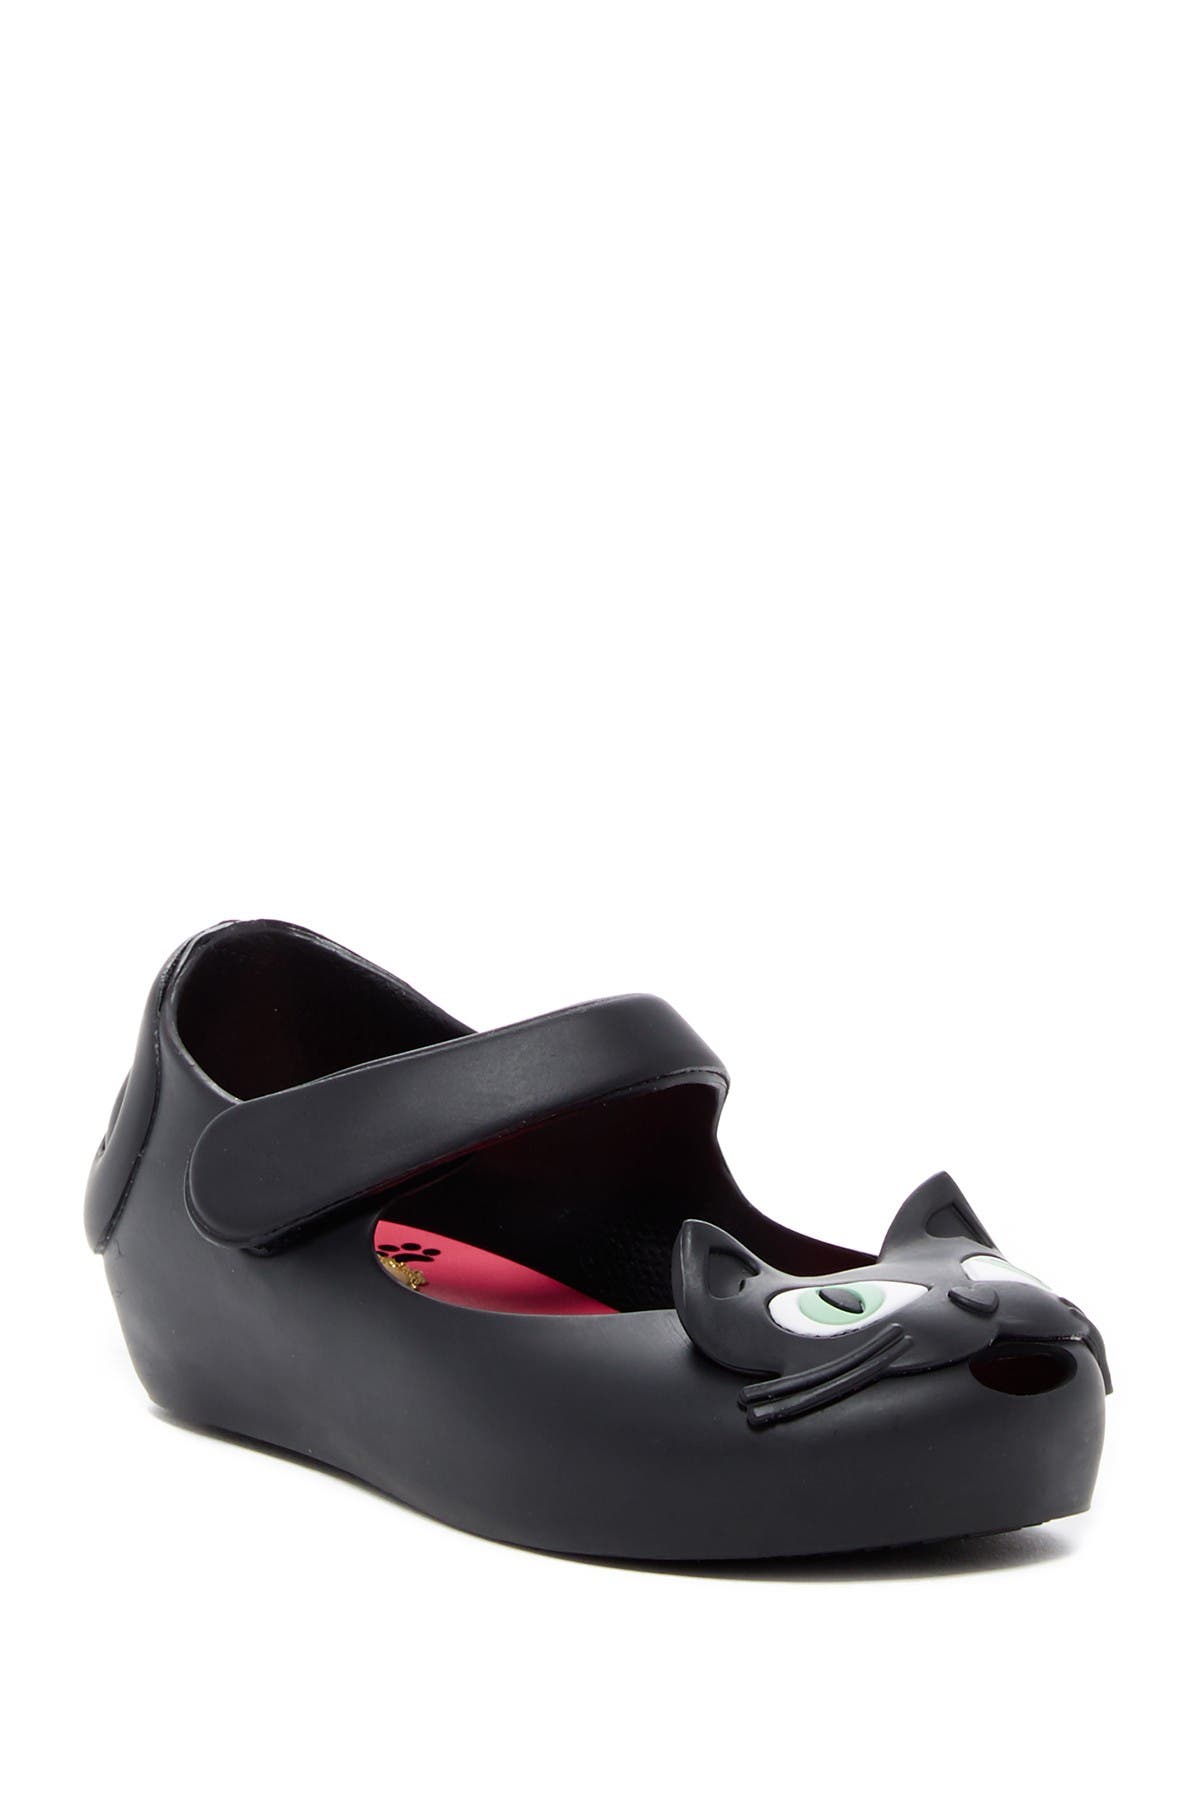 mini melissa black cat shoes